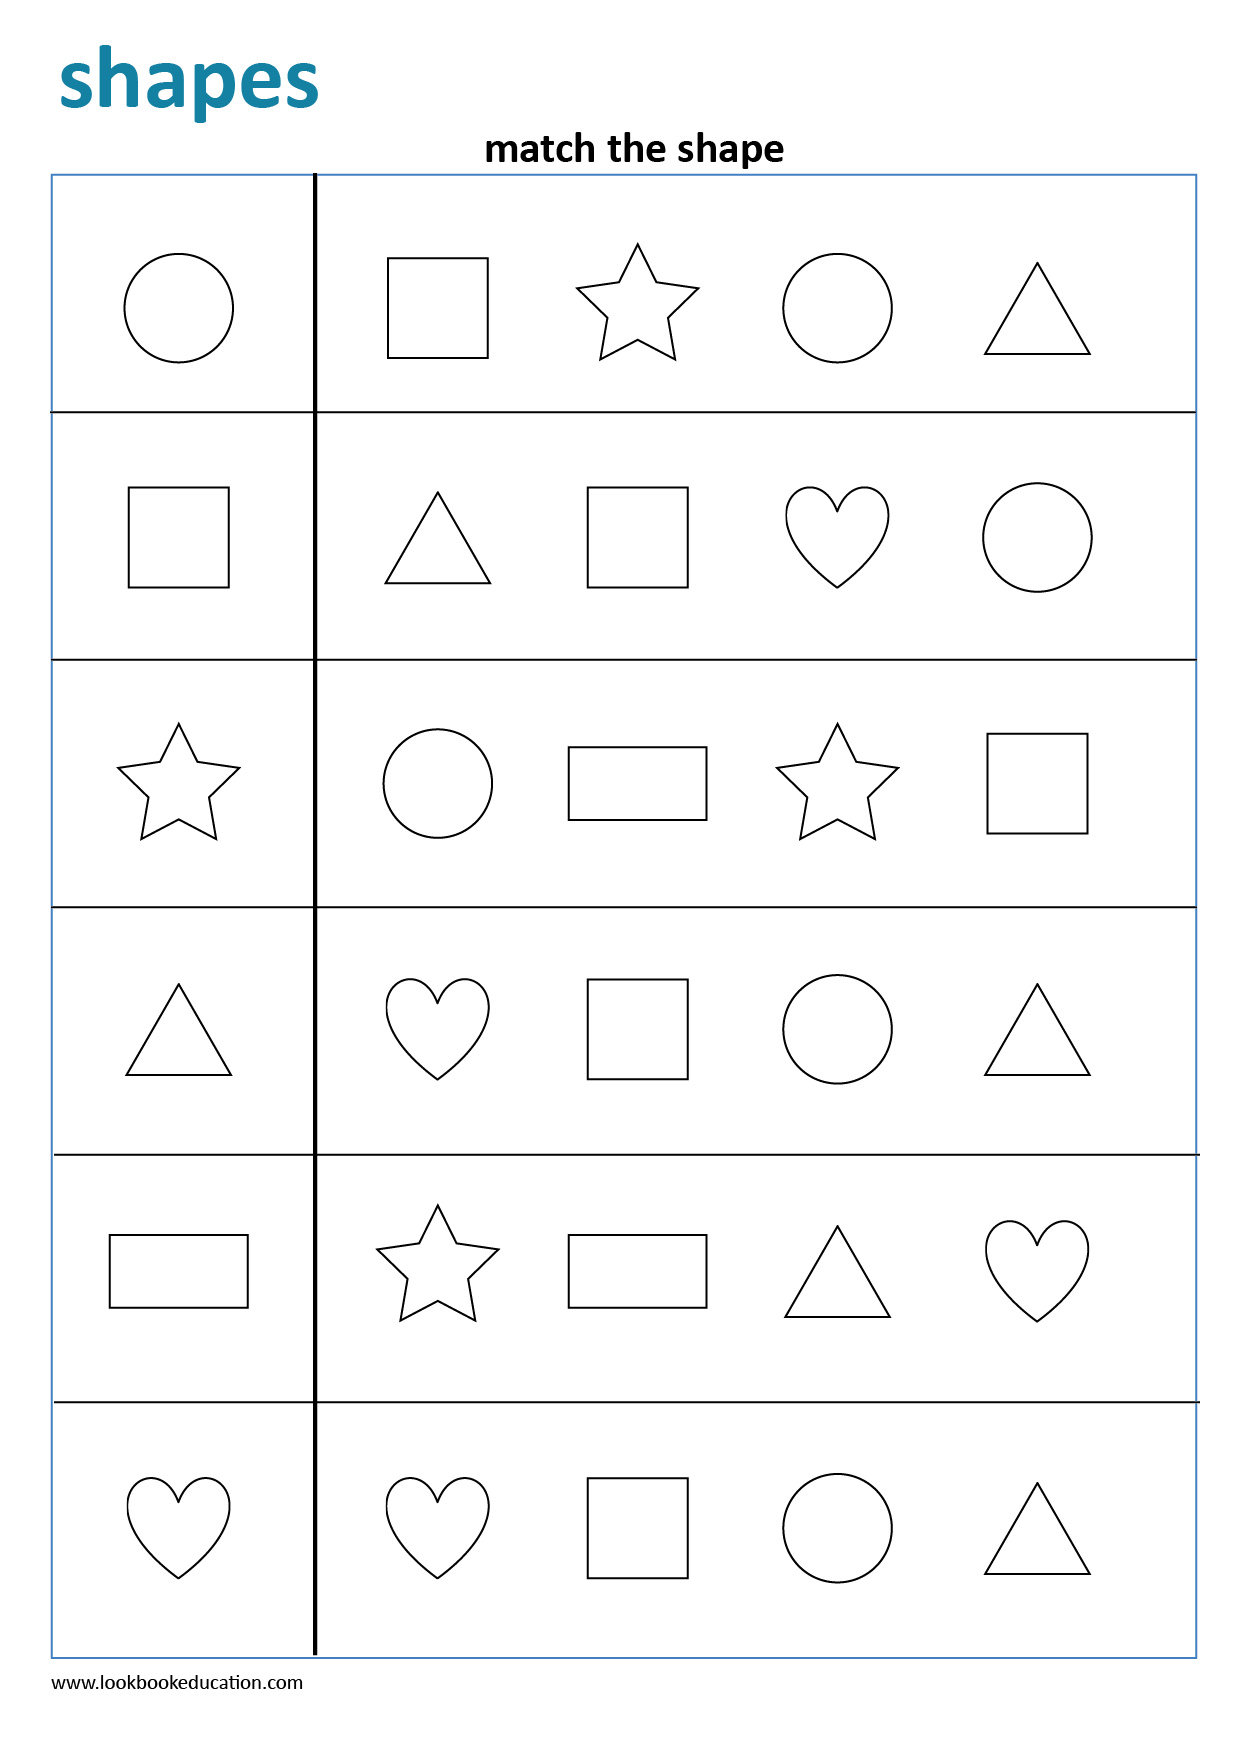 Worksheet Matching Shapes - Lookbook Education